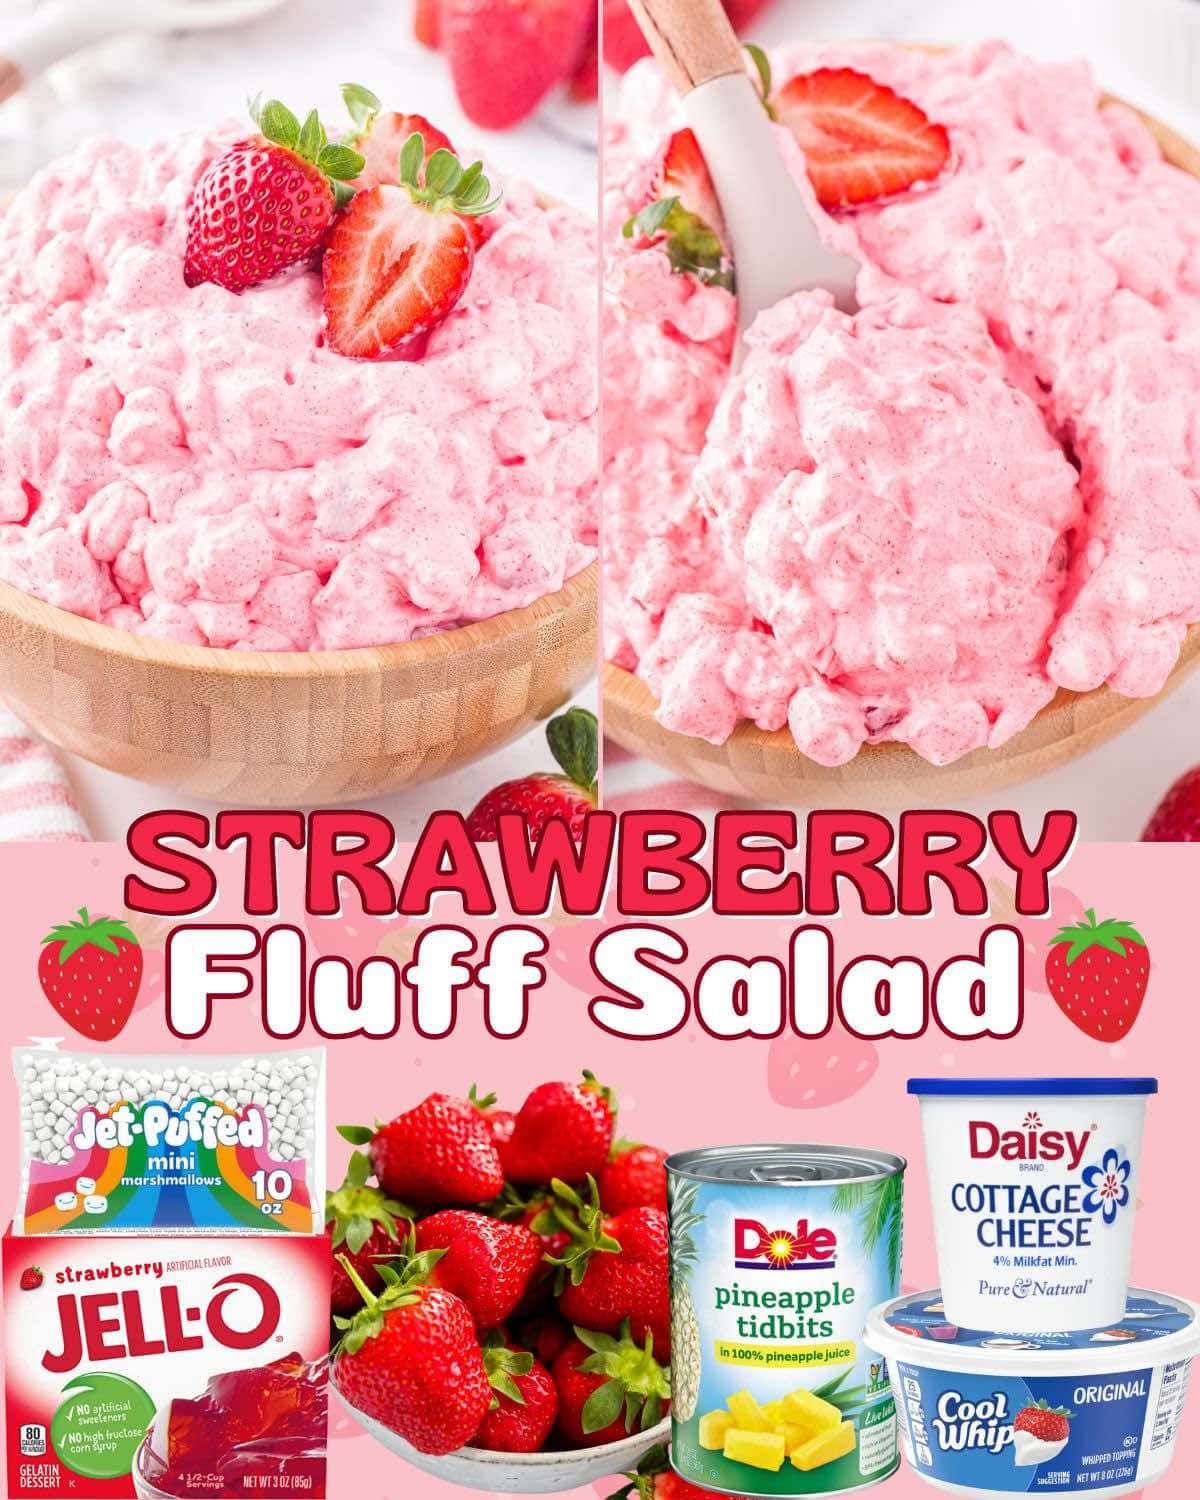 strawberry fluff salad pin.